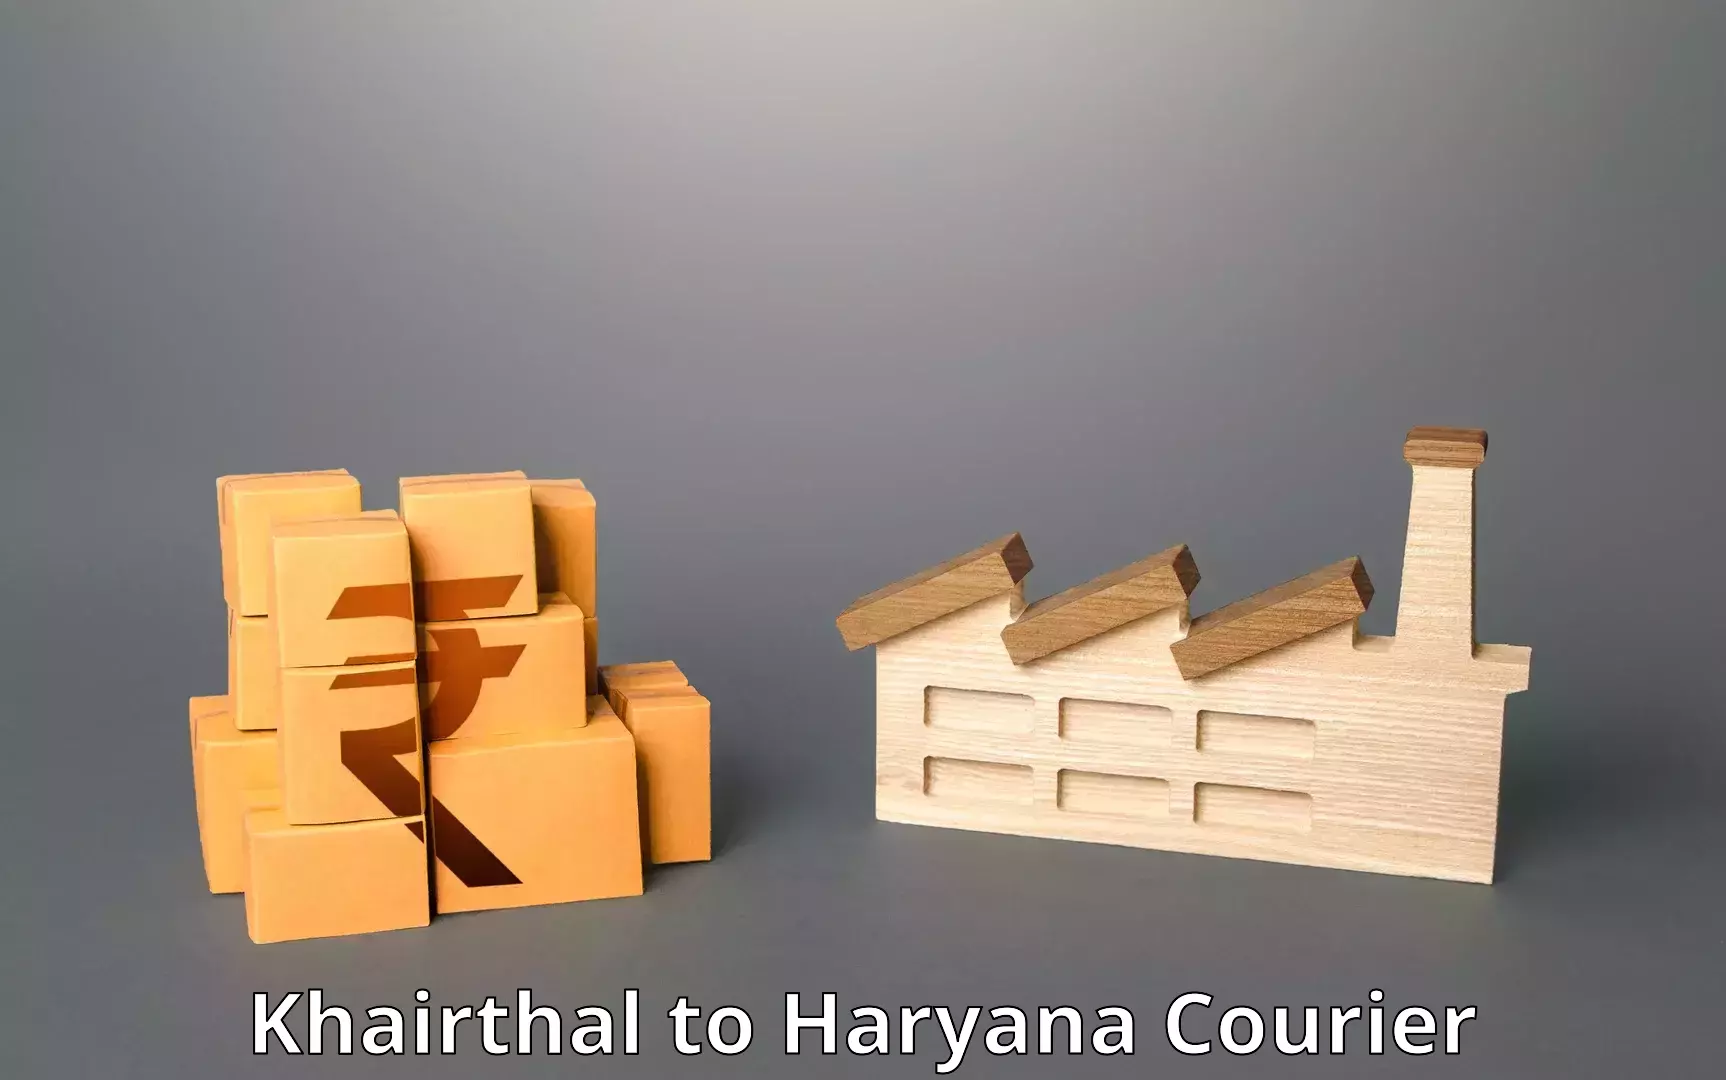 Logistics service provider Khairthal to Haryana